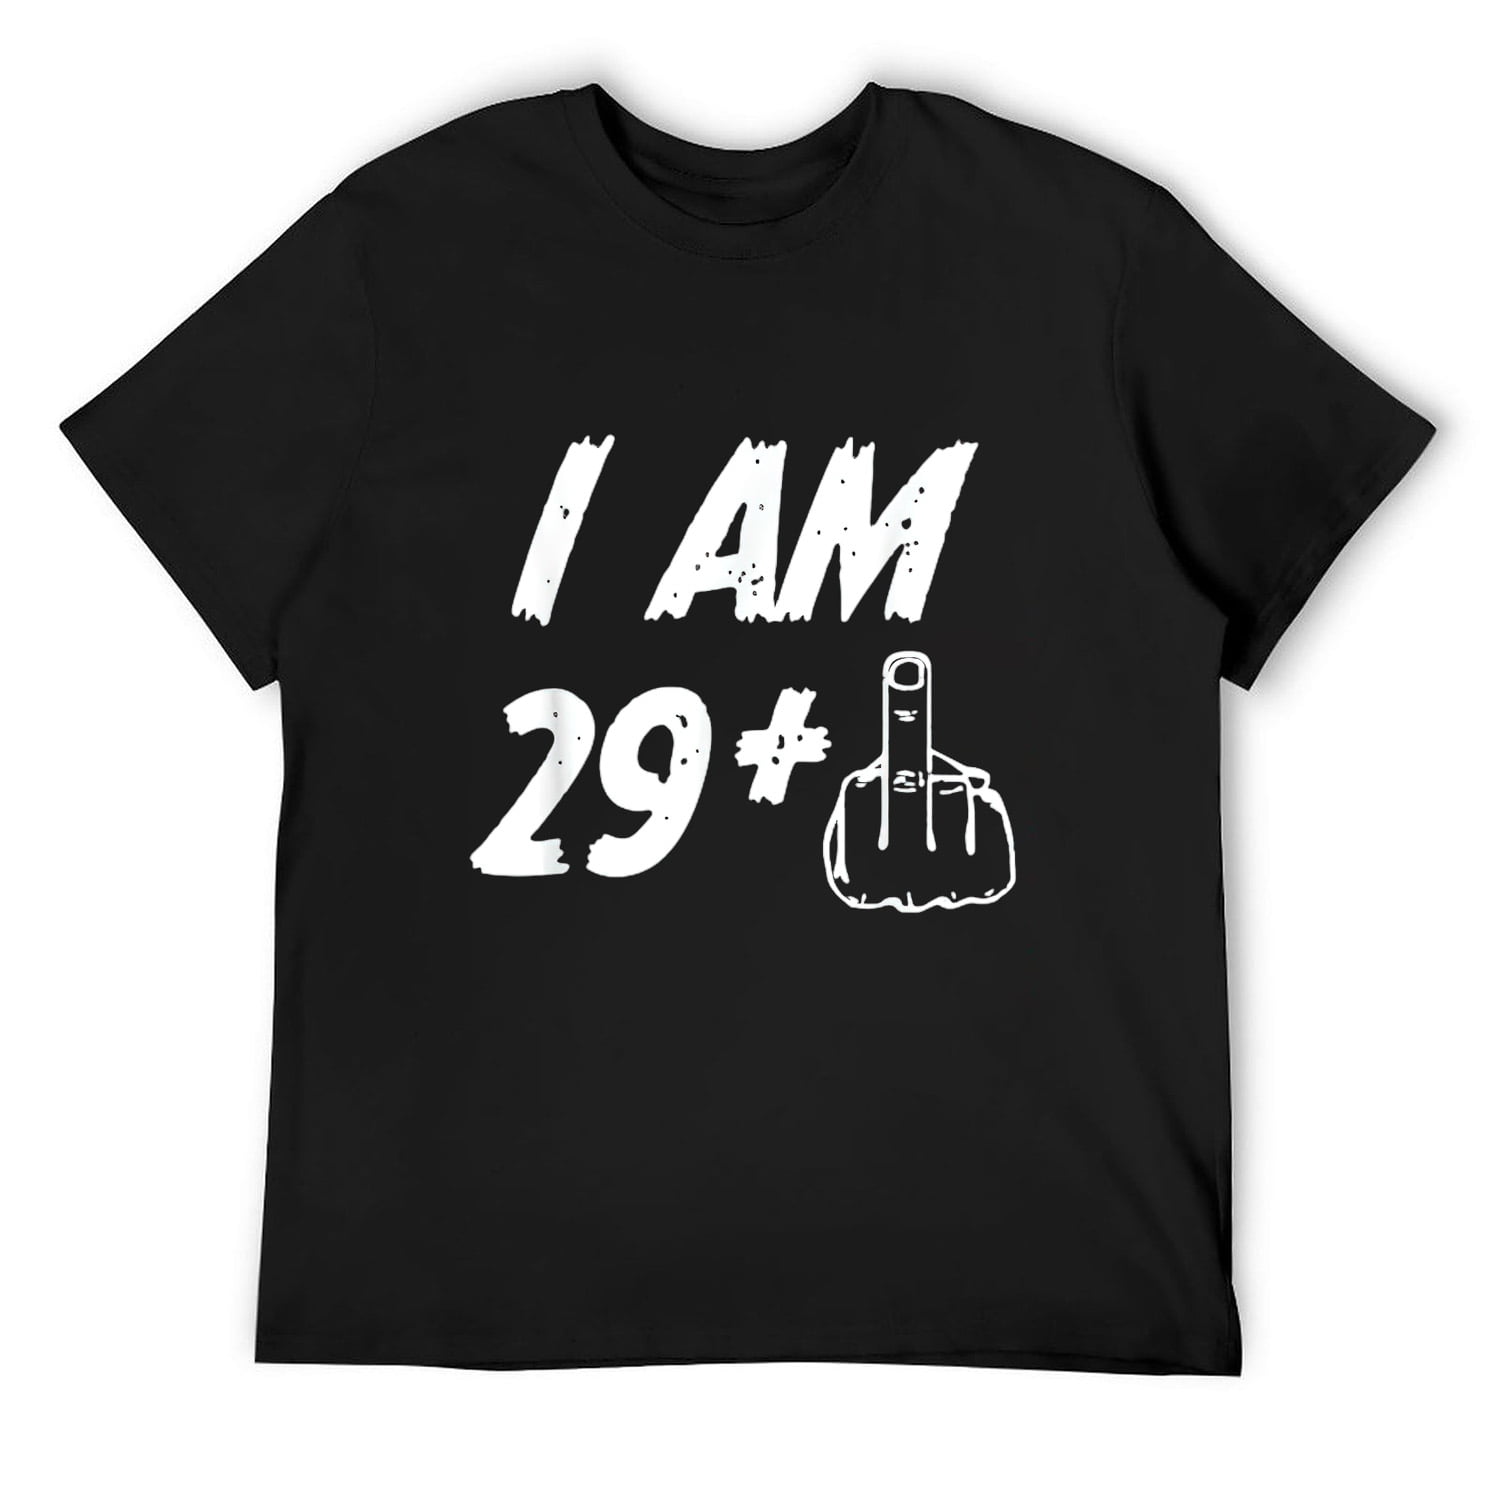 30th Birthday Funny T-shirt - I am 29 plus 1 Shirt men women Black ...